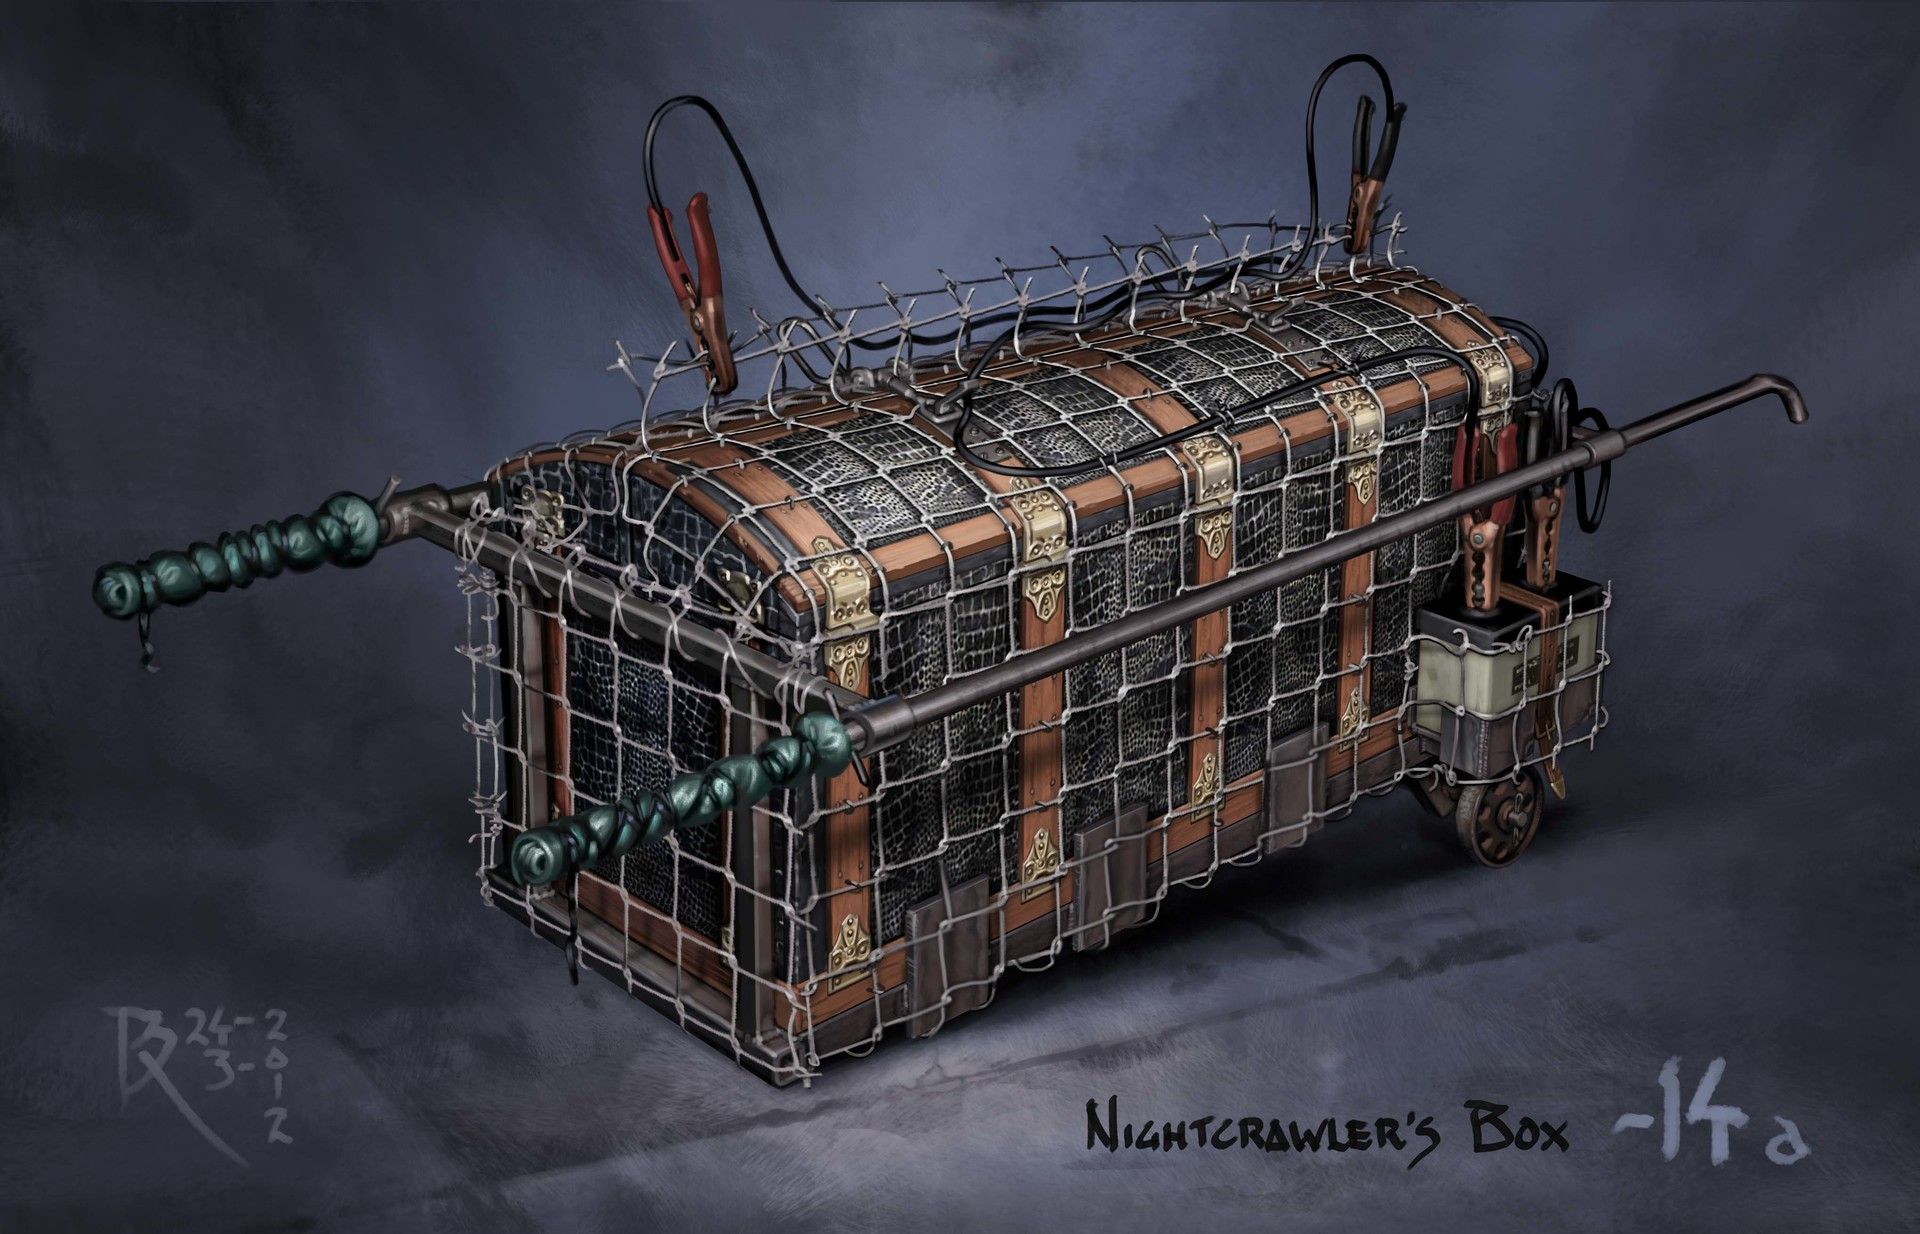 Nightcrawler Box Concept 2 by Bartol Rendulic